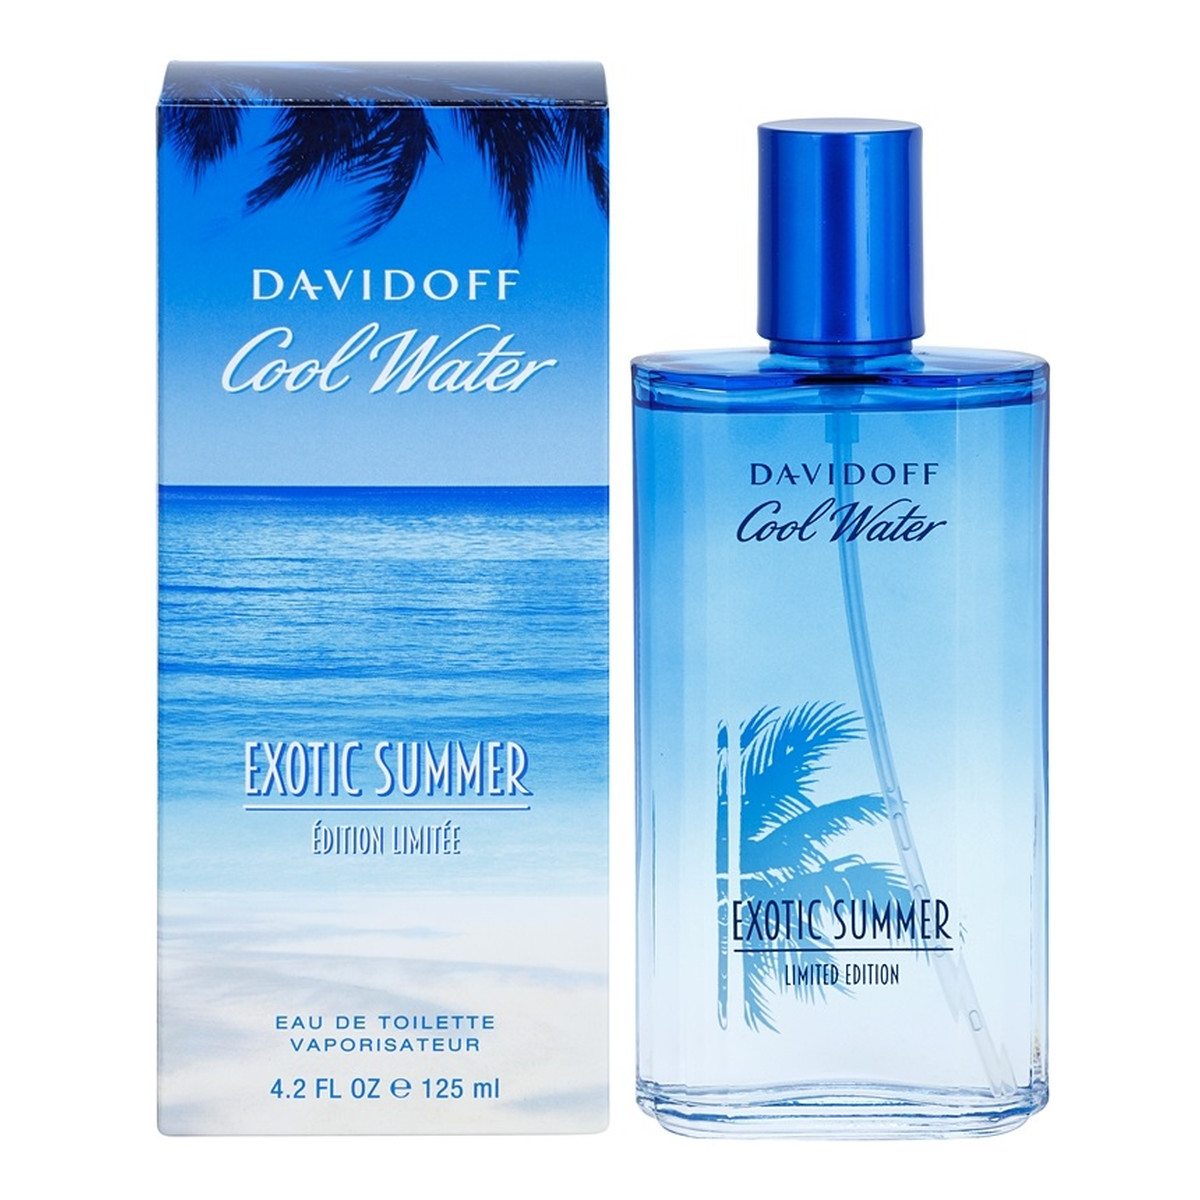 Davidoff Cool Water Man Exotic Summer Limited Edition woda toaletowa dla mężczyzn 125ml